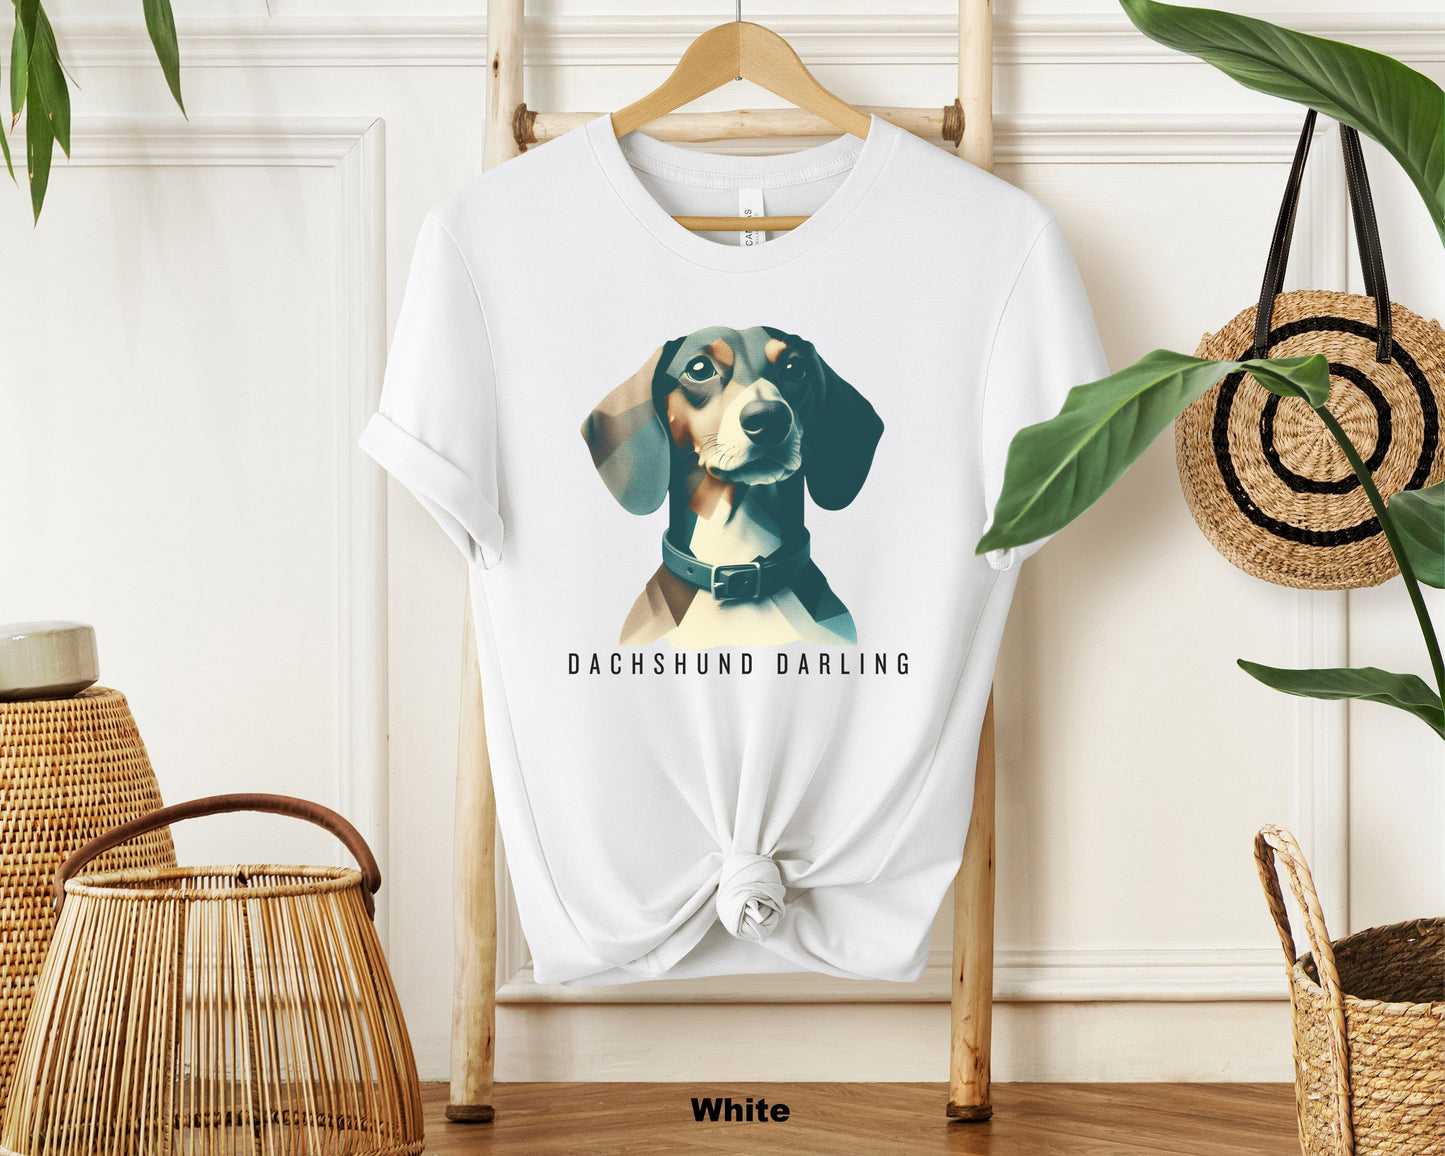 "Dachshund Darling Unisex Short Sleeve T-Shirt | Cute Dog Print | Soft Cotton | Animal Lover Gift"